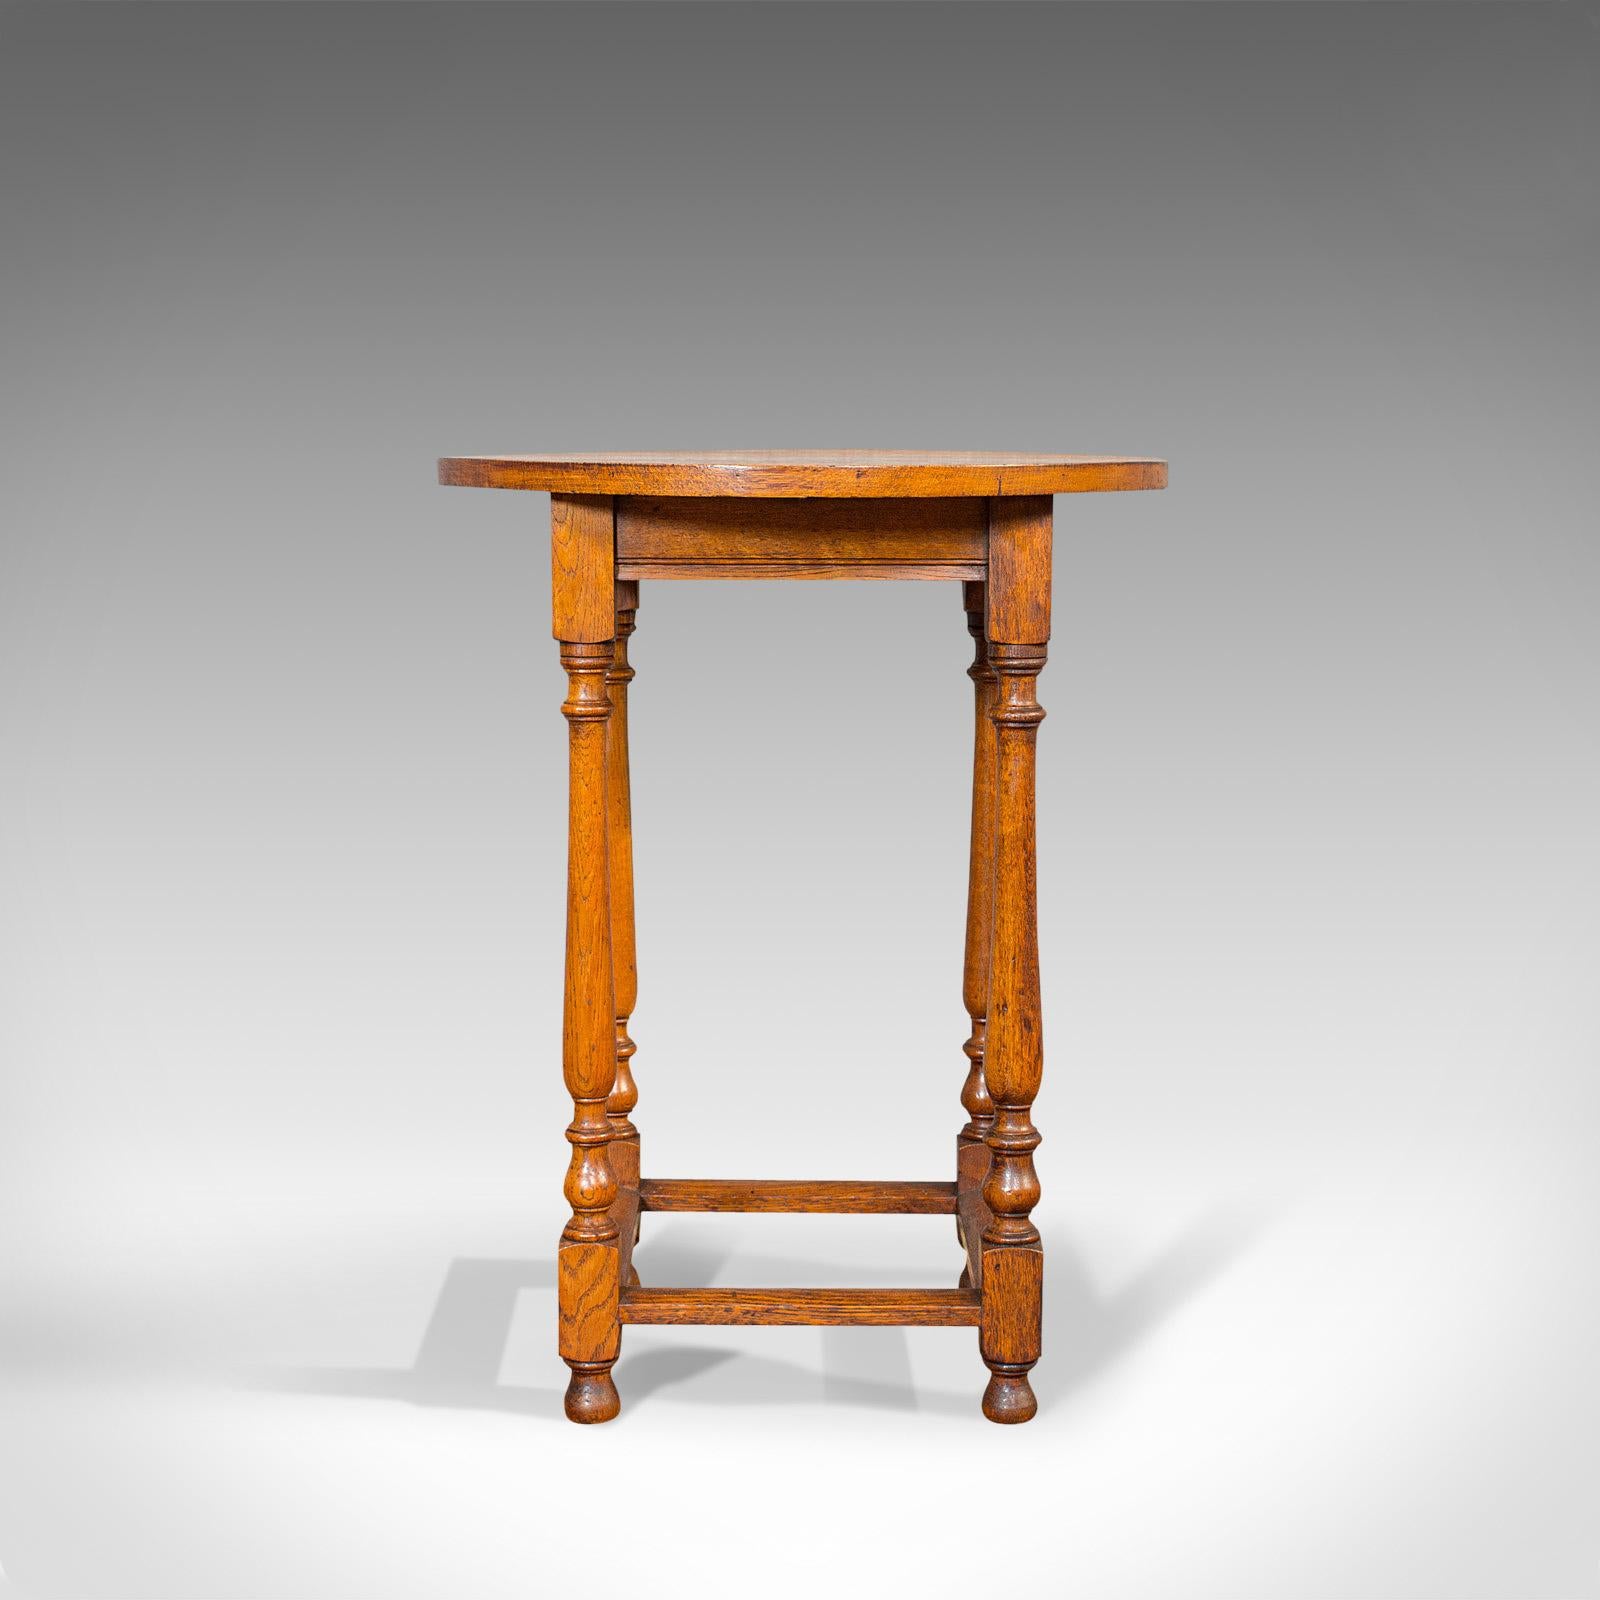 20th Century Circular Occasional Table, English, Oak, Side, Lamp, Edwardian, circa 1910